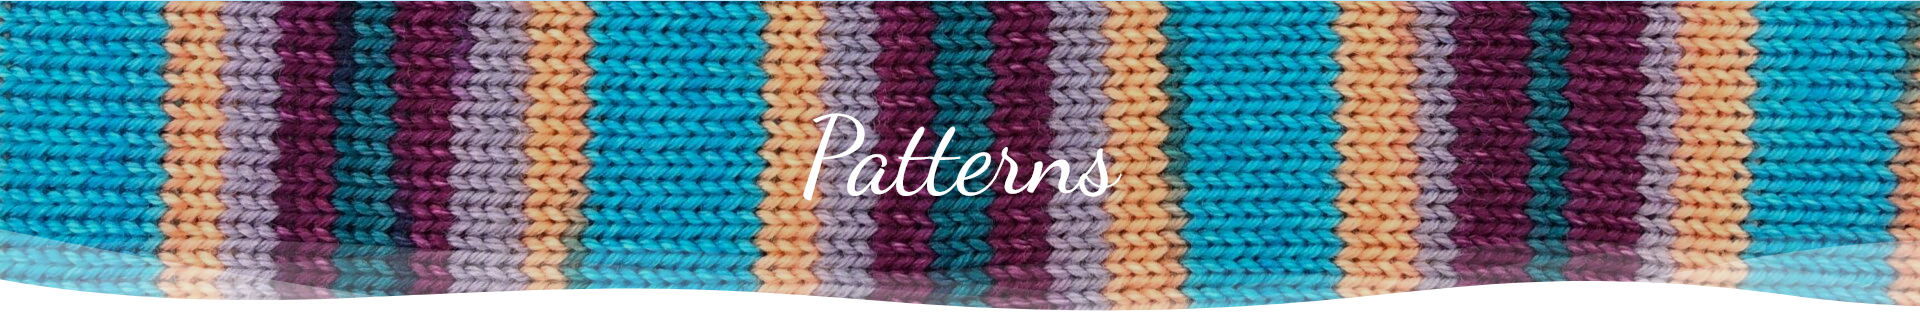 Self-striping yarn patterns banner